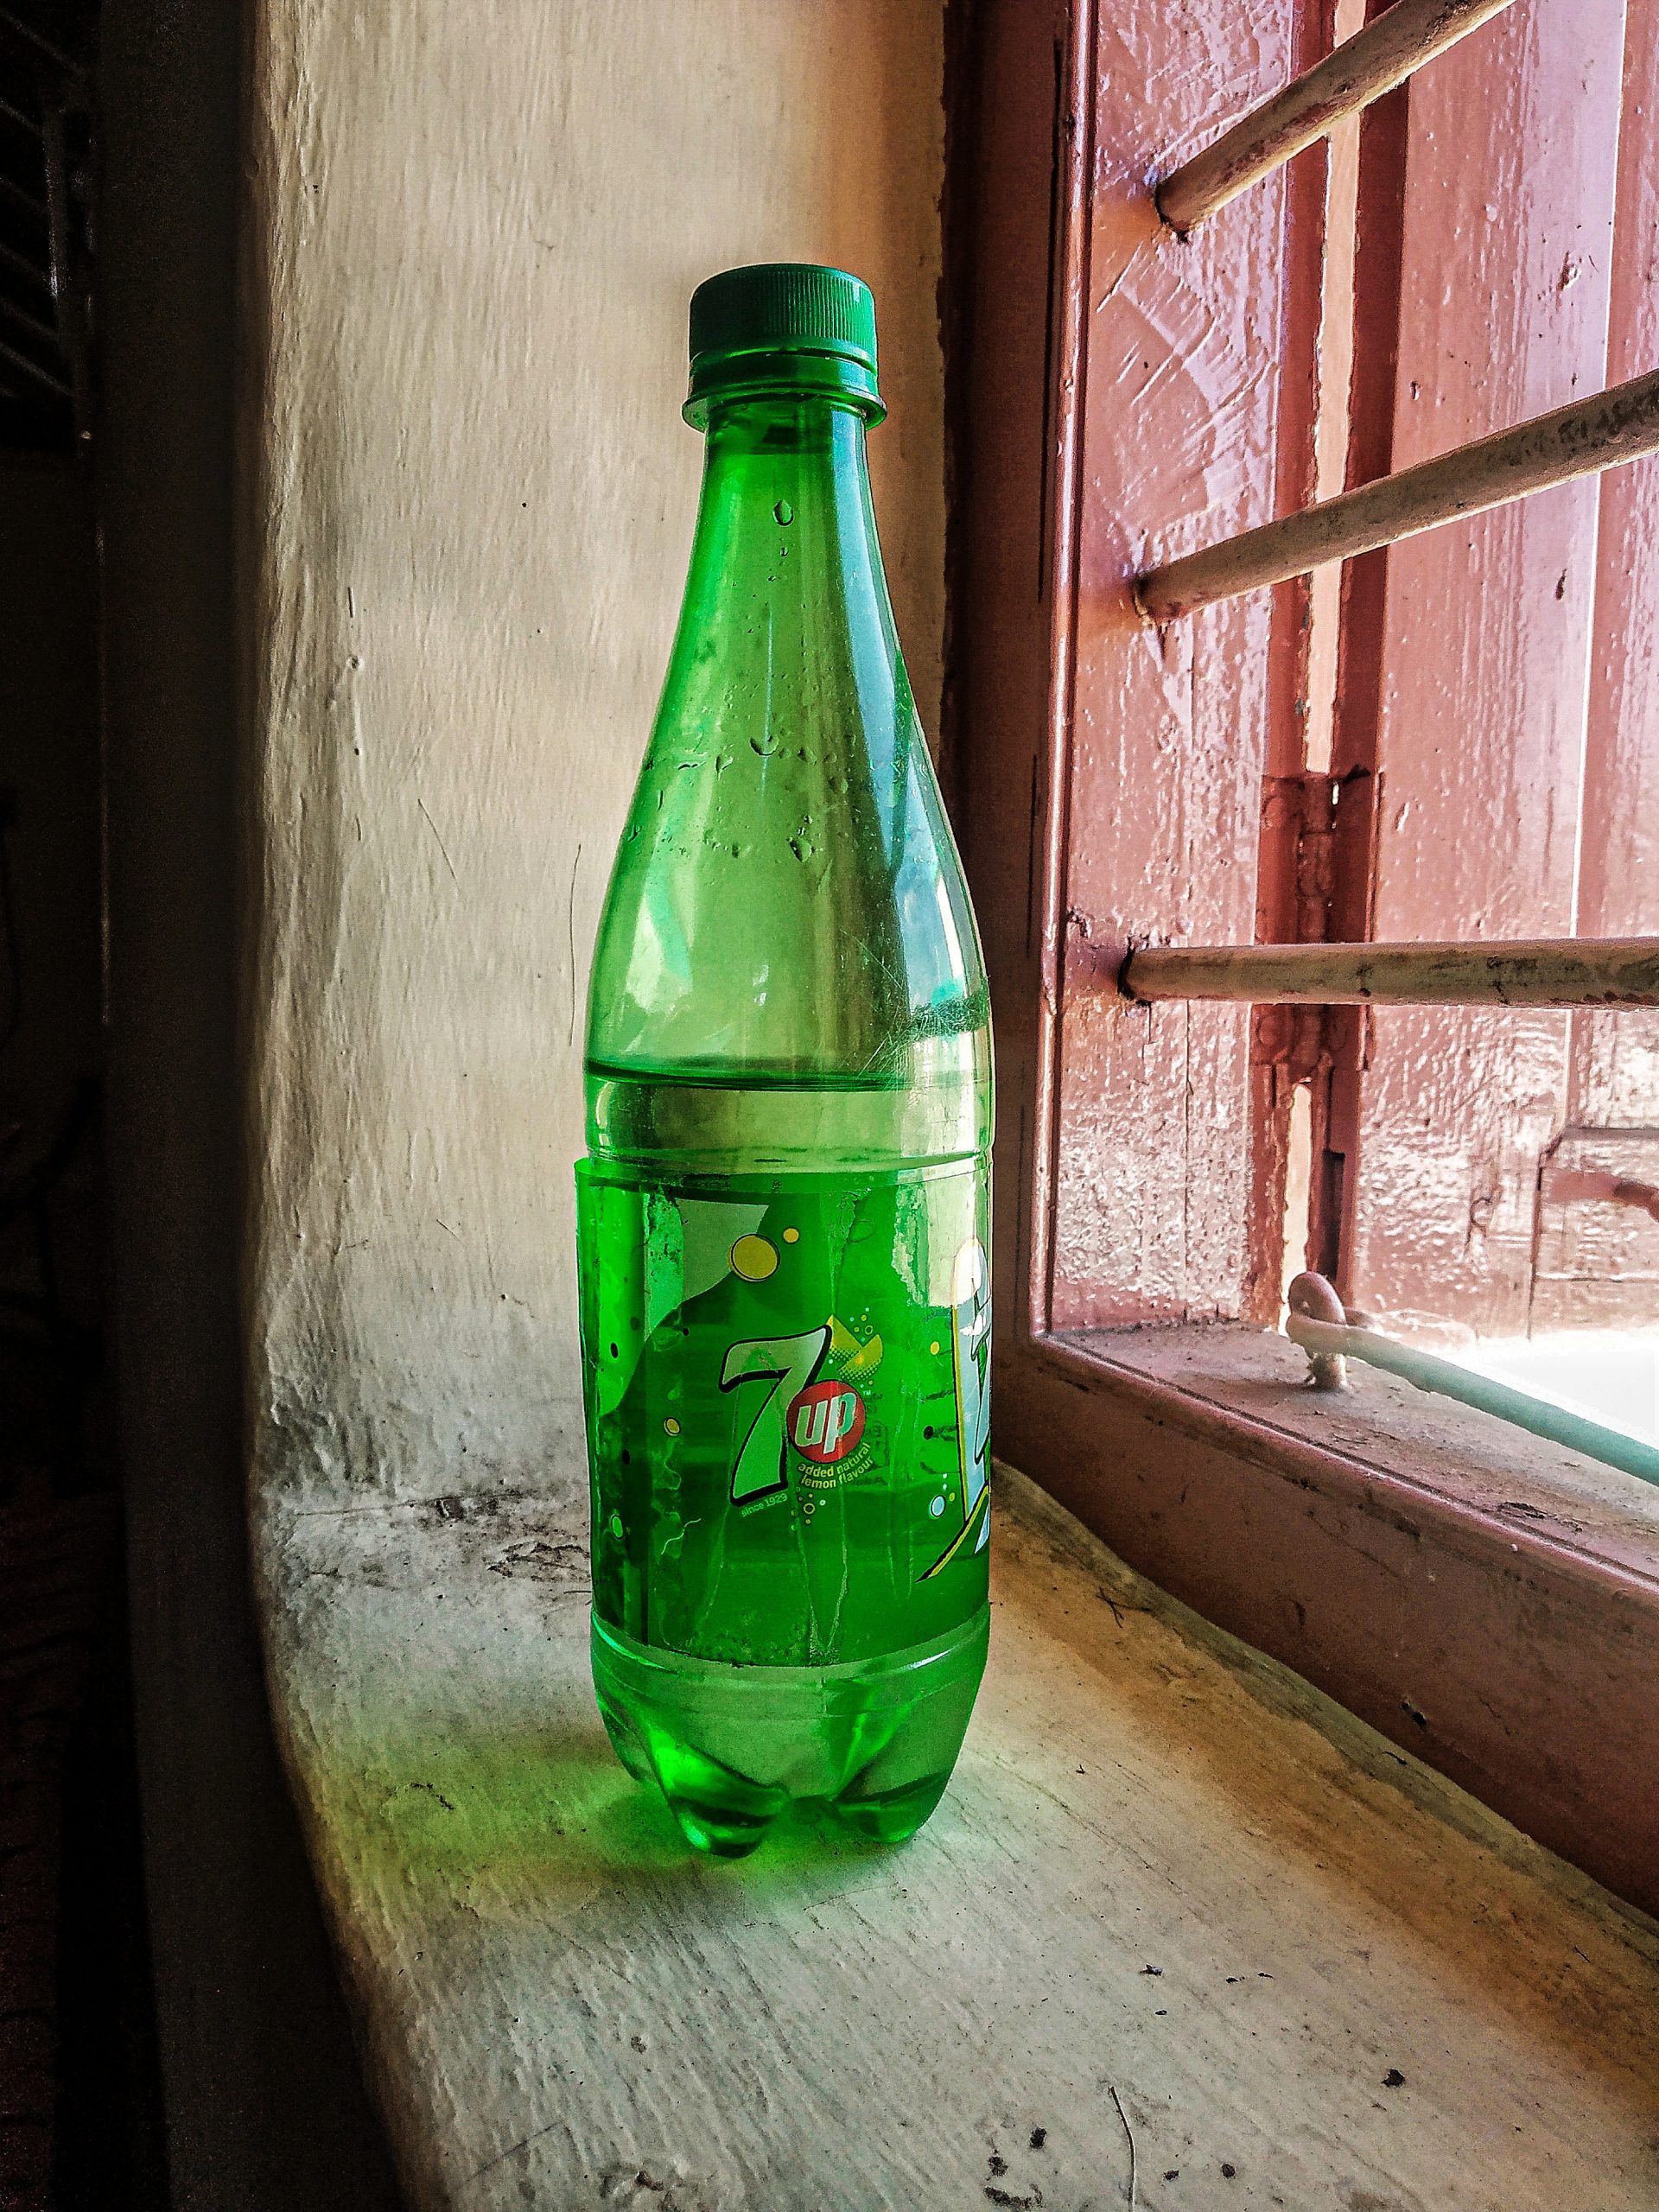 A soft drink bottle